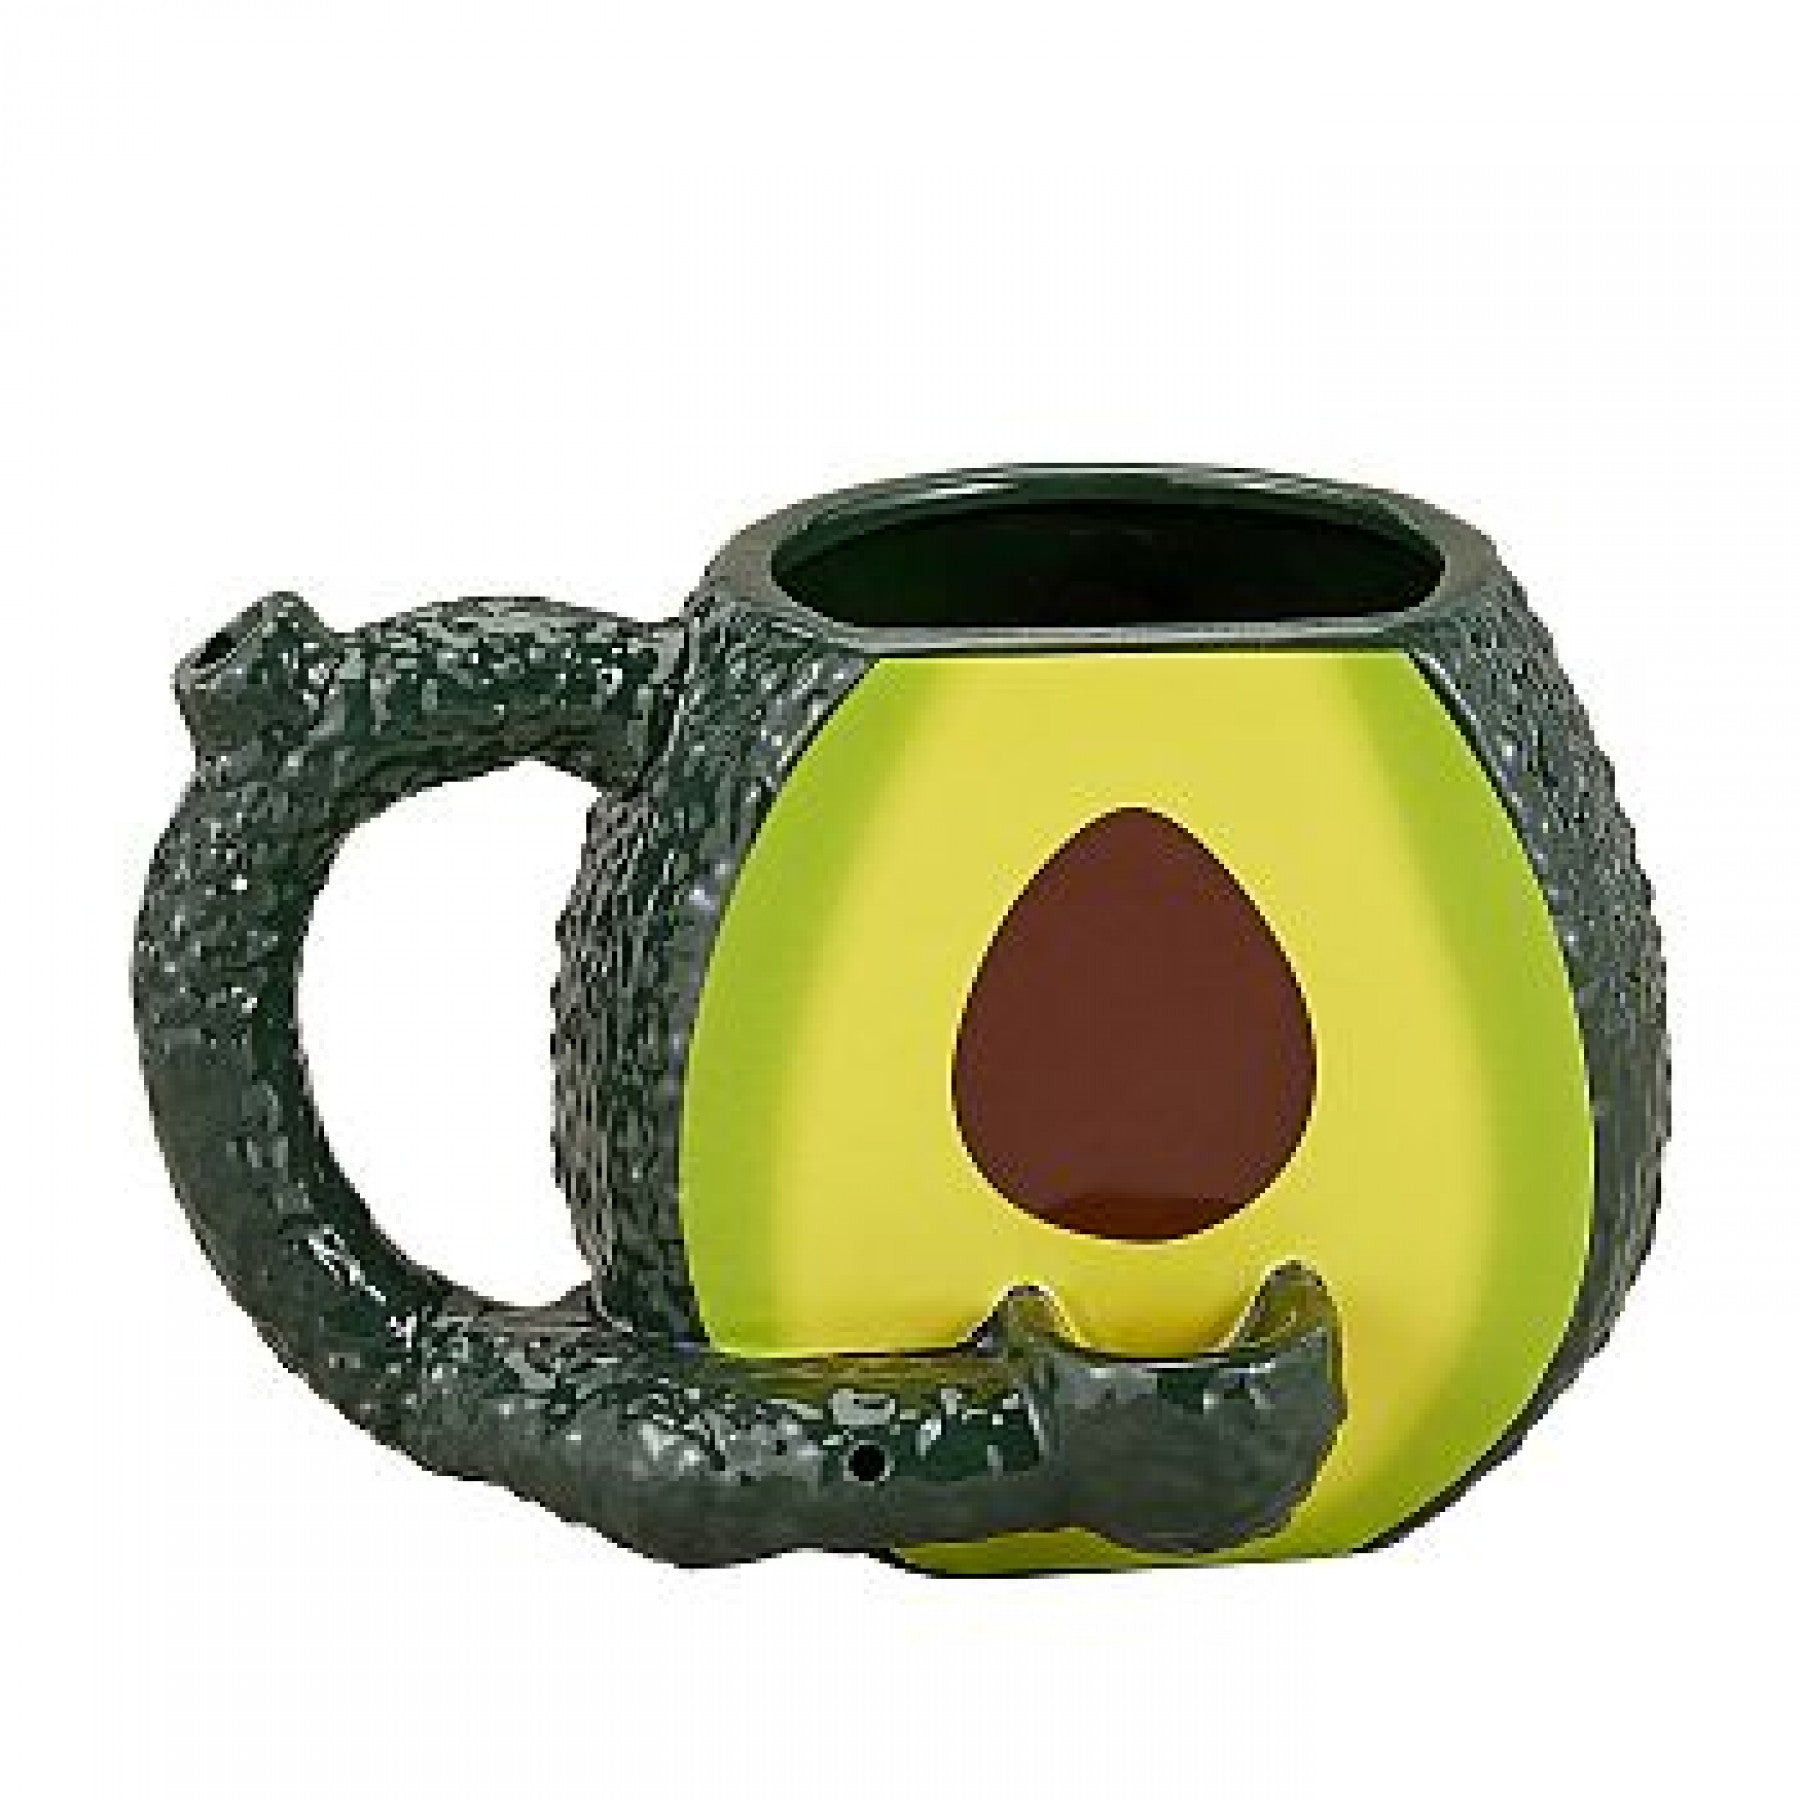 Mug pipe that looks like an avocado